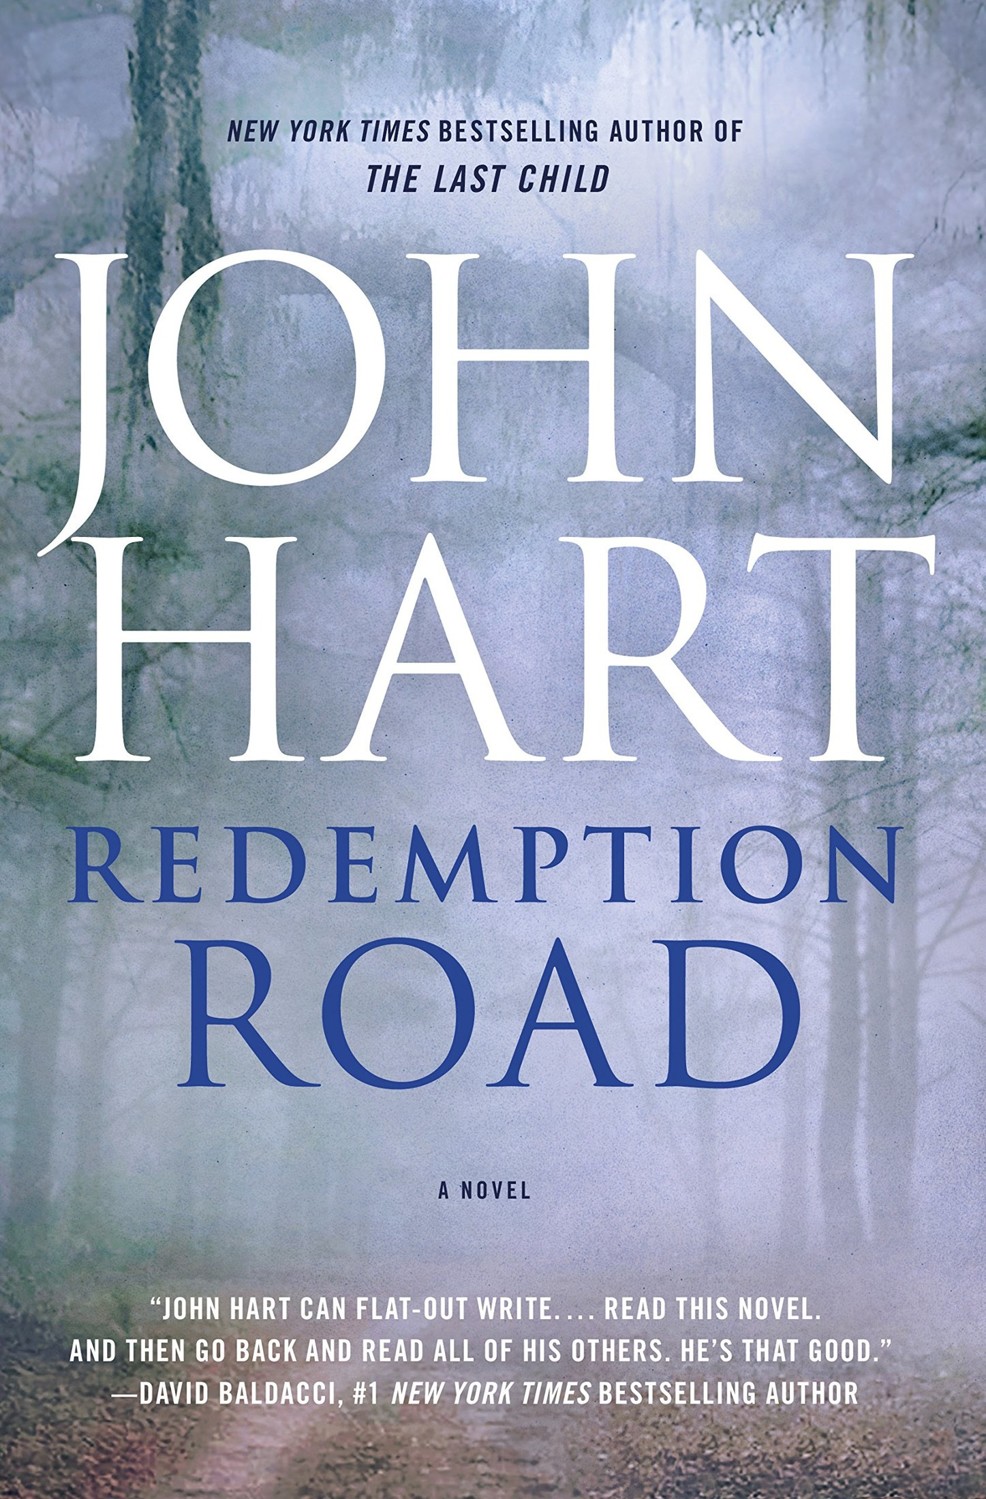 Redemption Road: A Novel by John Hart